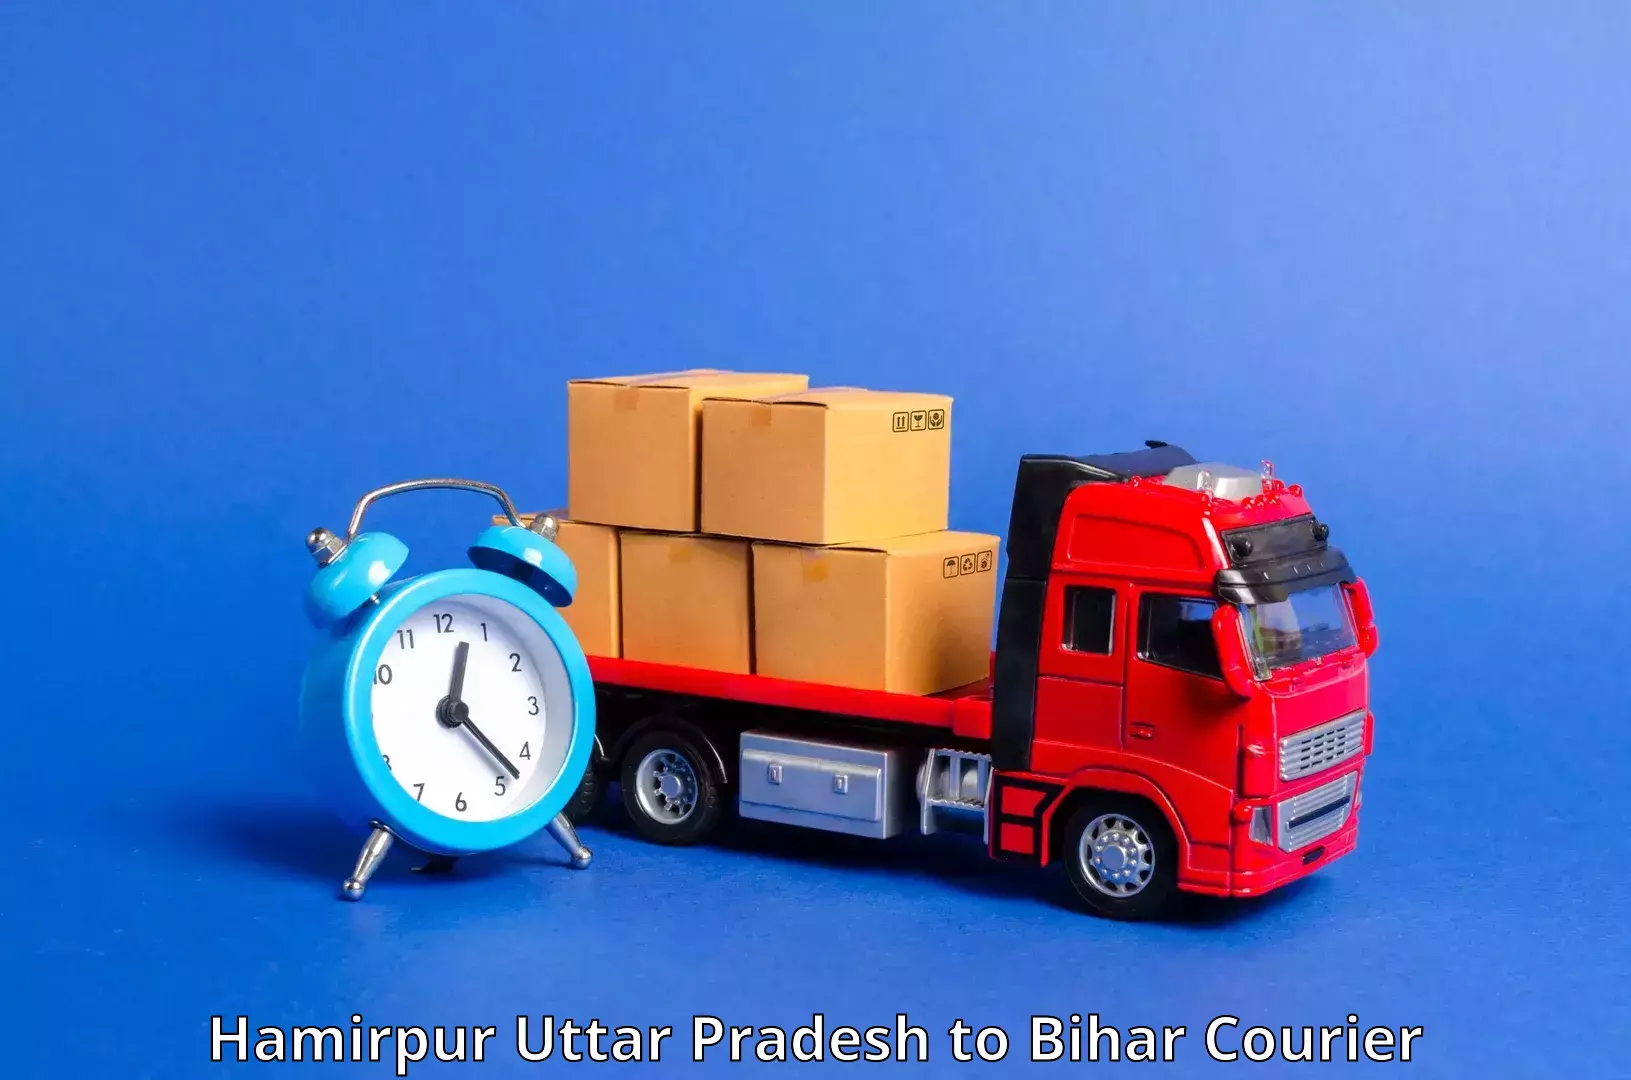 Urgent courier needs Hamirpur Uttar Pradesh to Barh